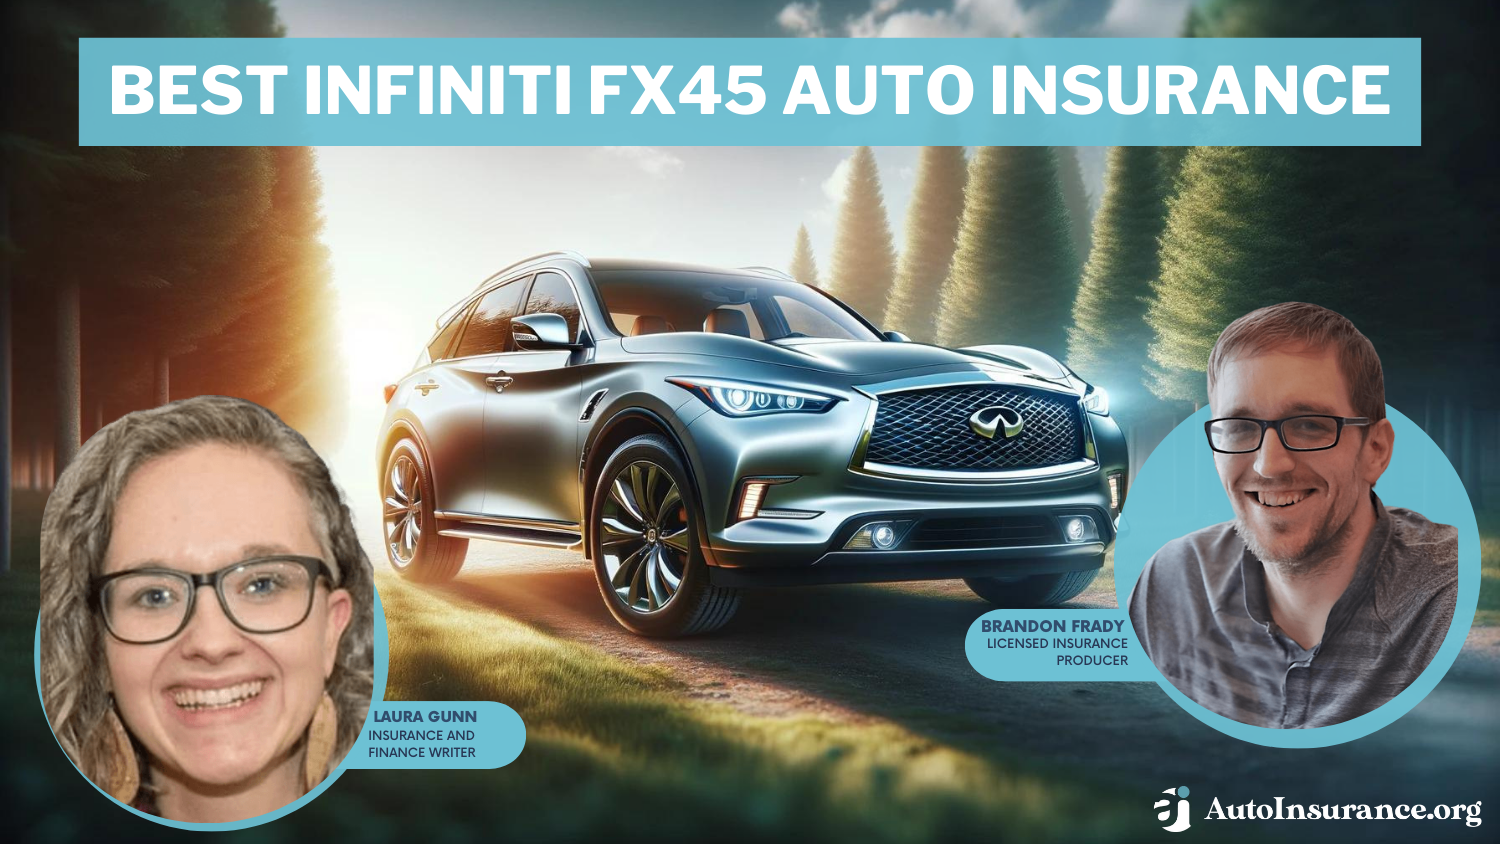 Best Infiniti FX45 Auto Insurance: State Farm, Geico, and Progressive